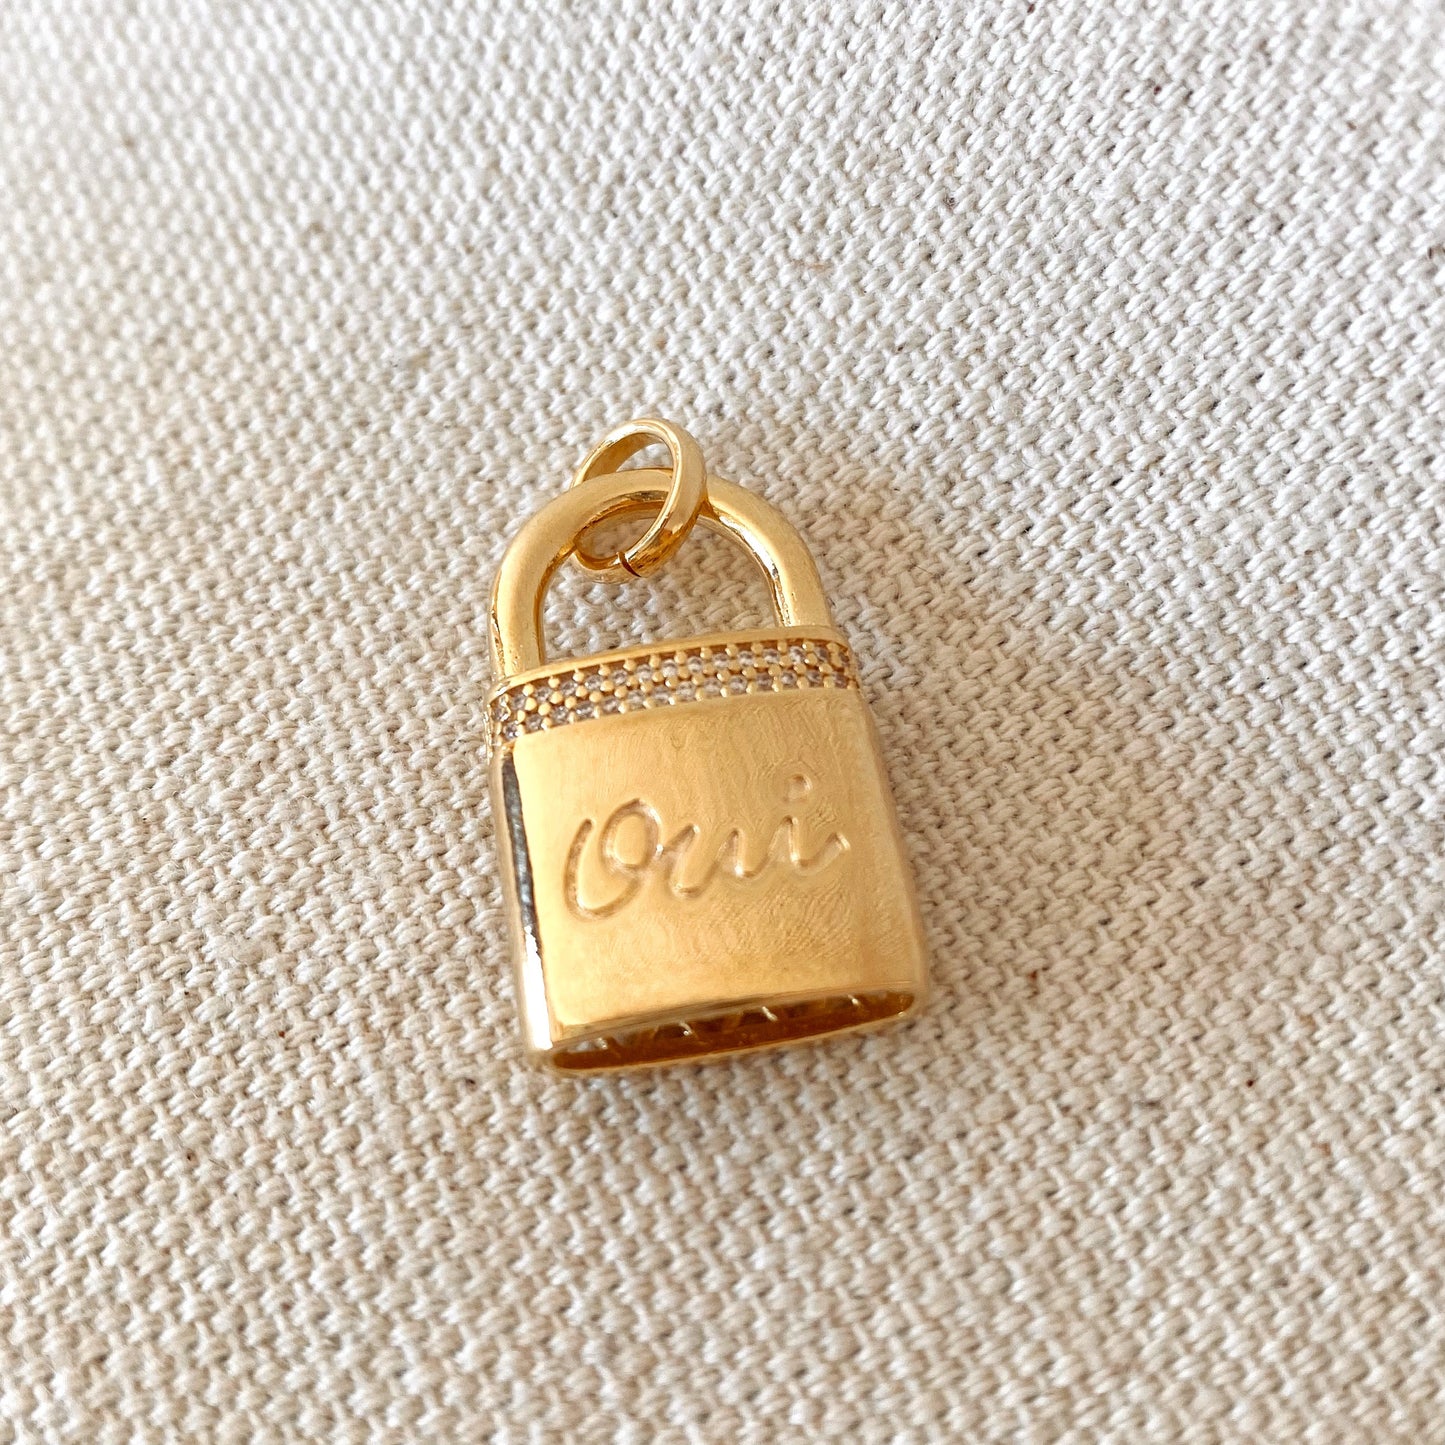 GoldFi 18k Gold Filled Oui Love Lock Pendant